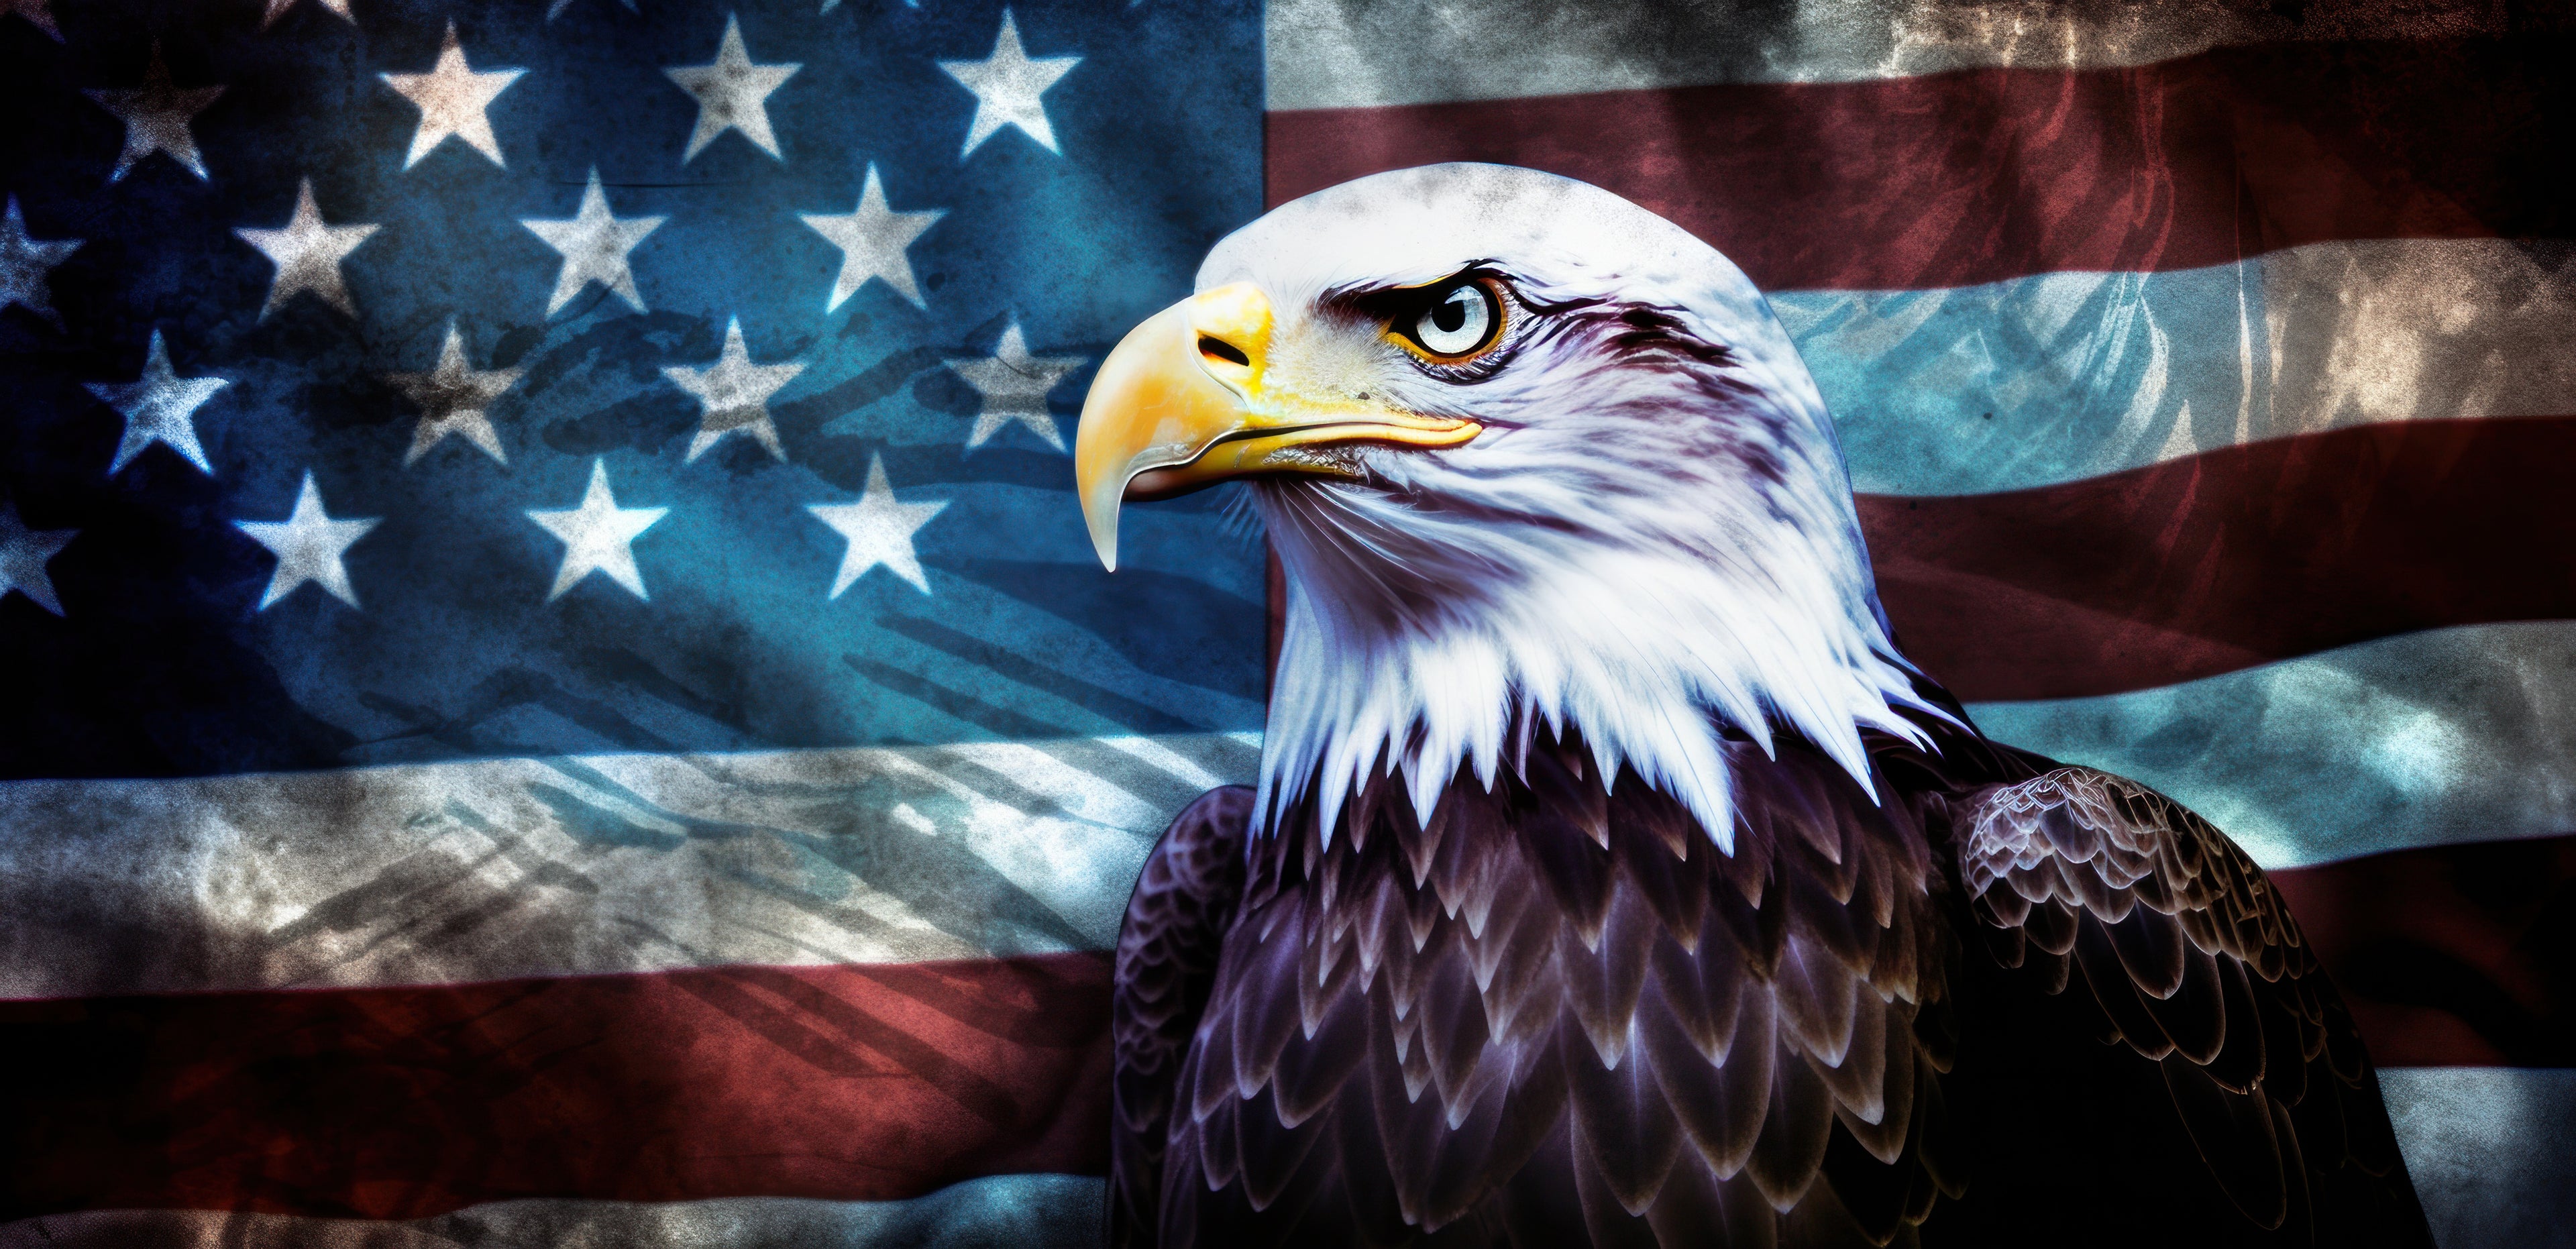 American Eagle and Flag